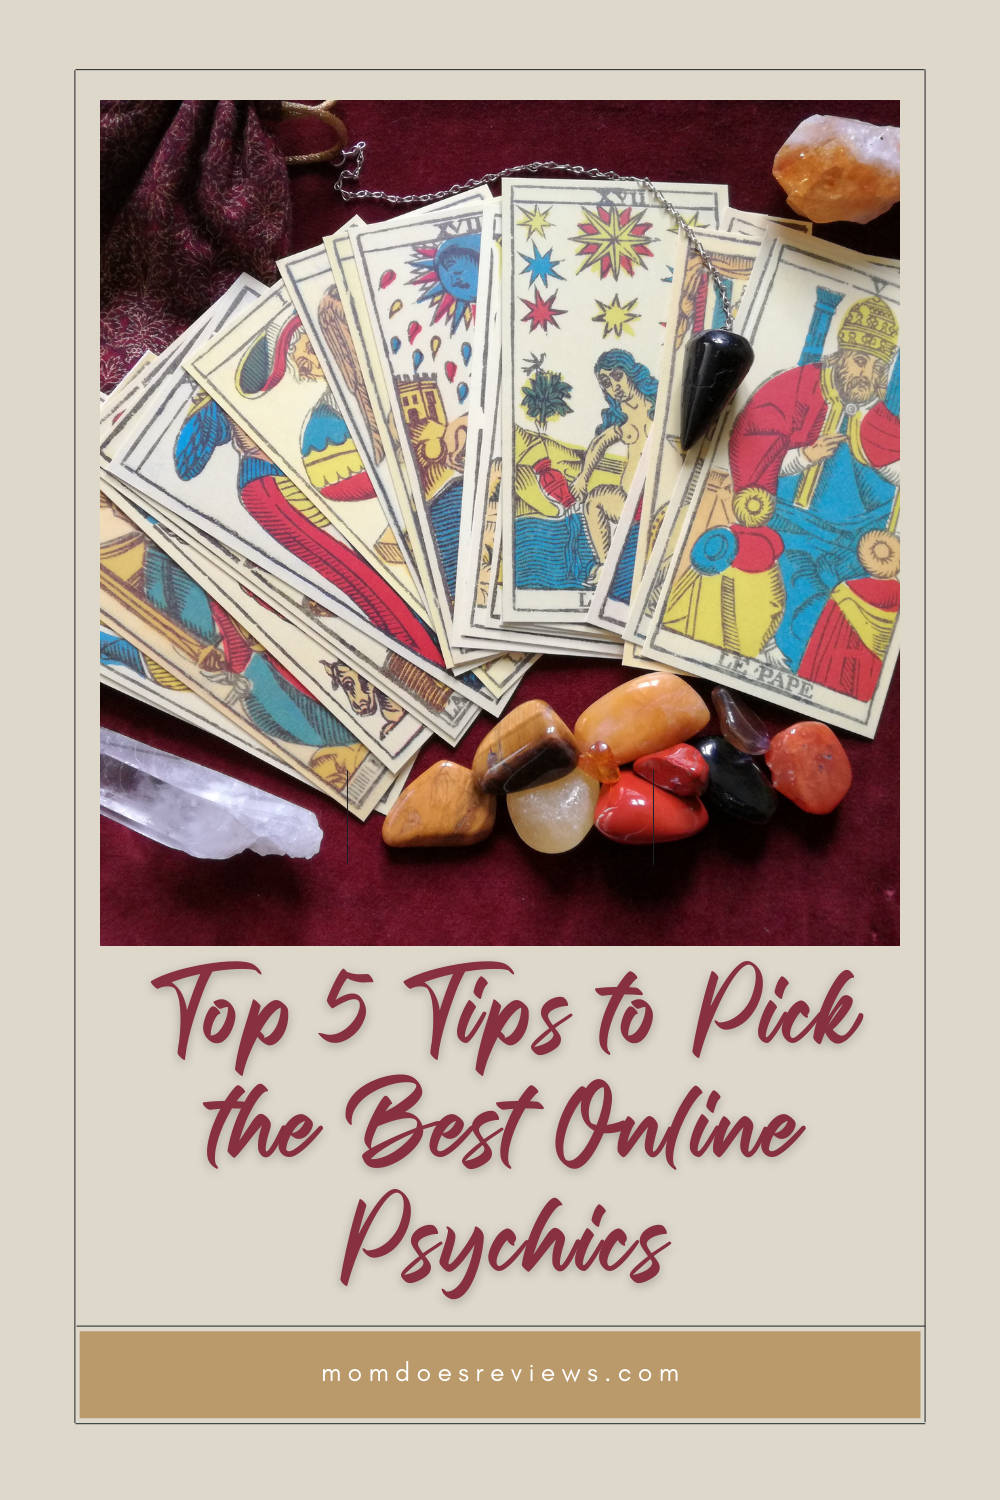 Top 5 Tips to Pick the Best Online Psychics